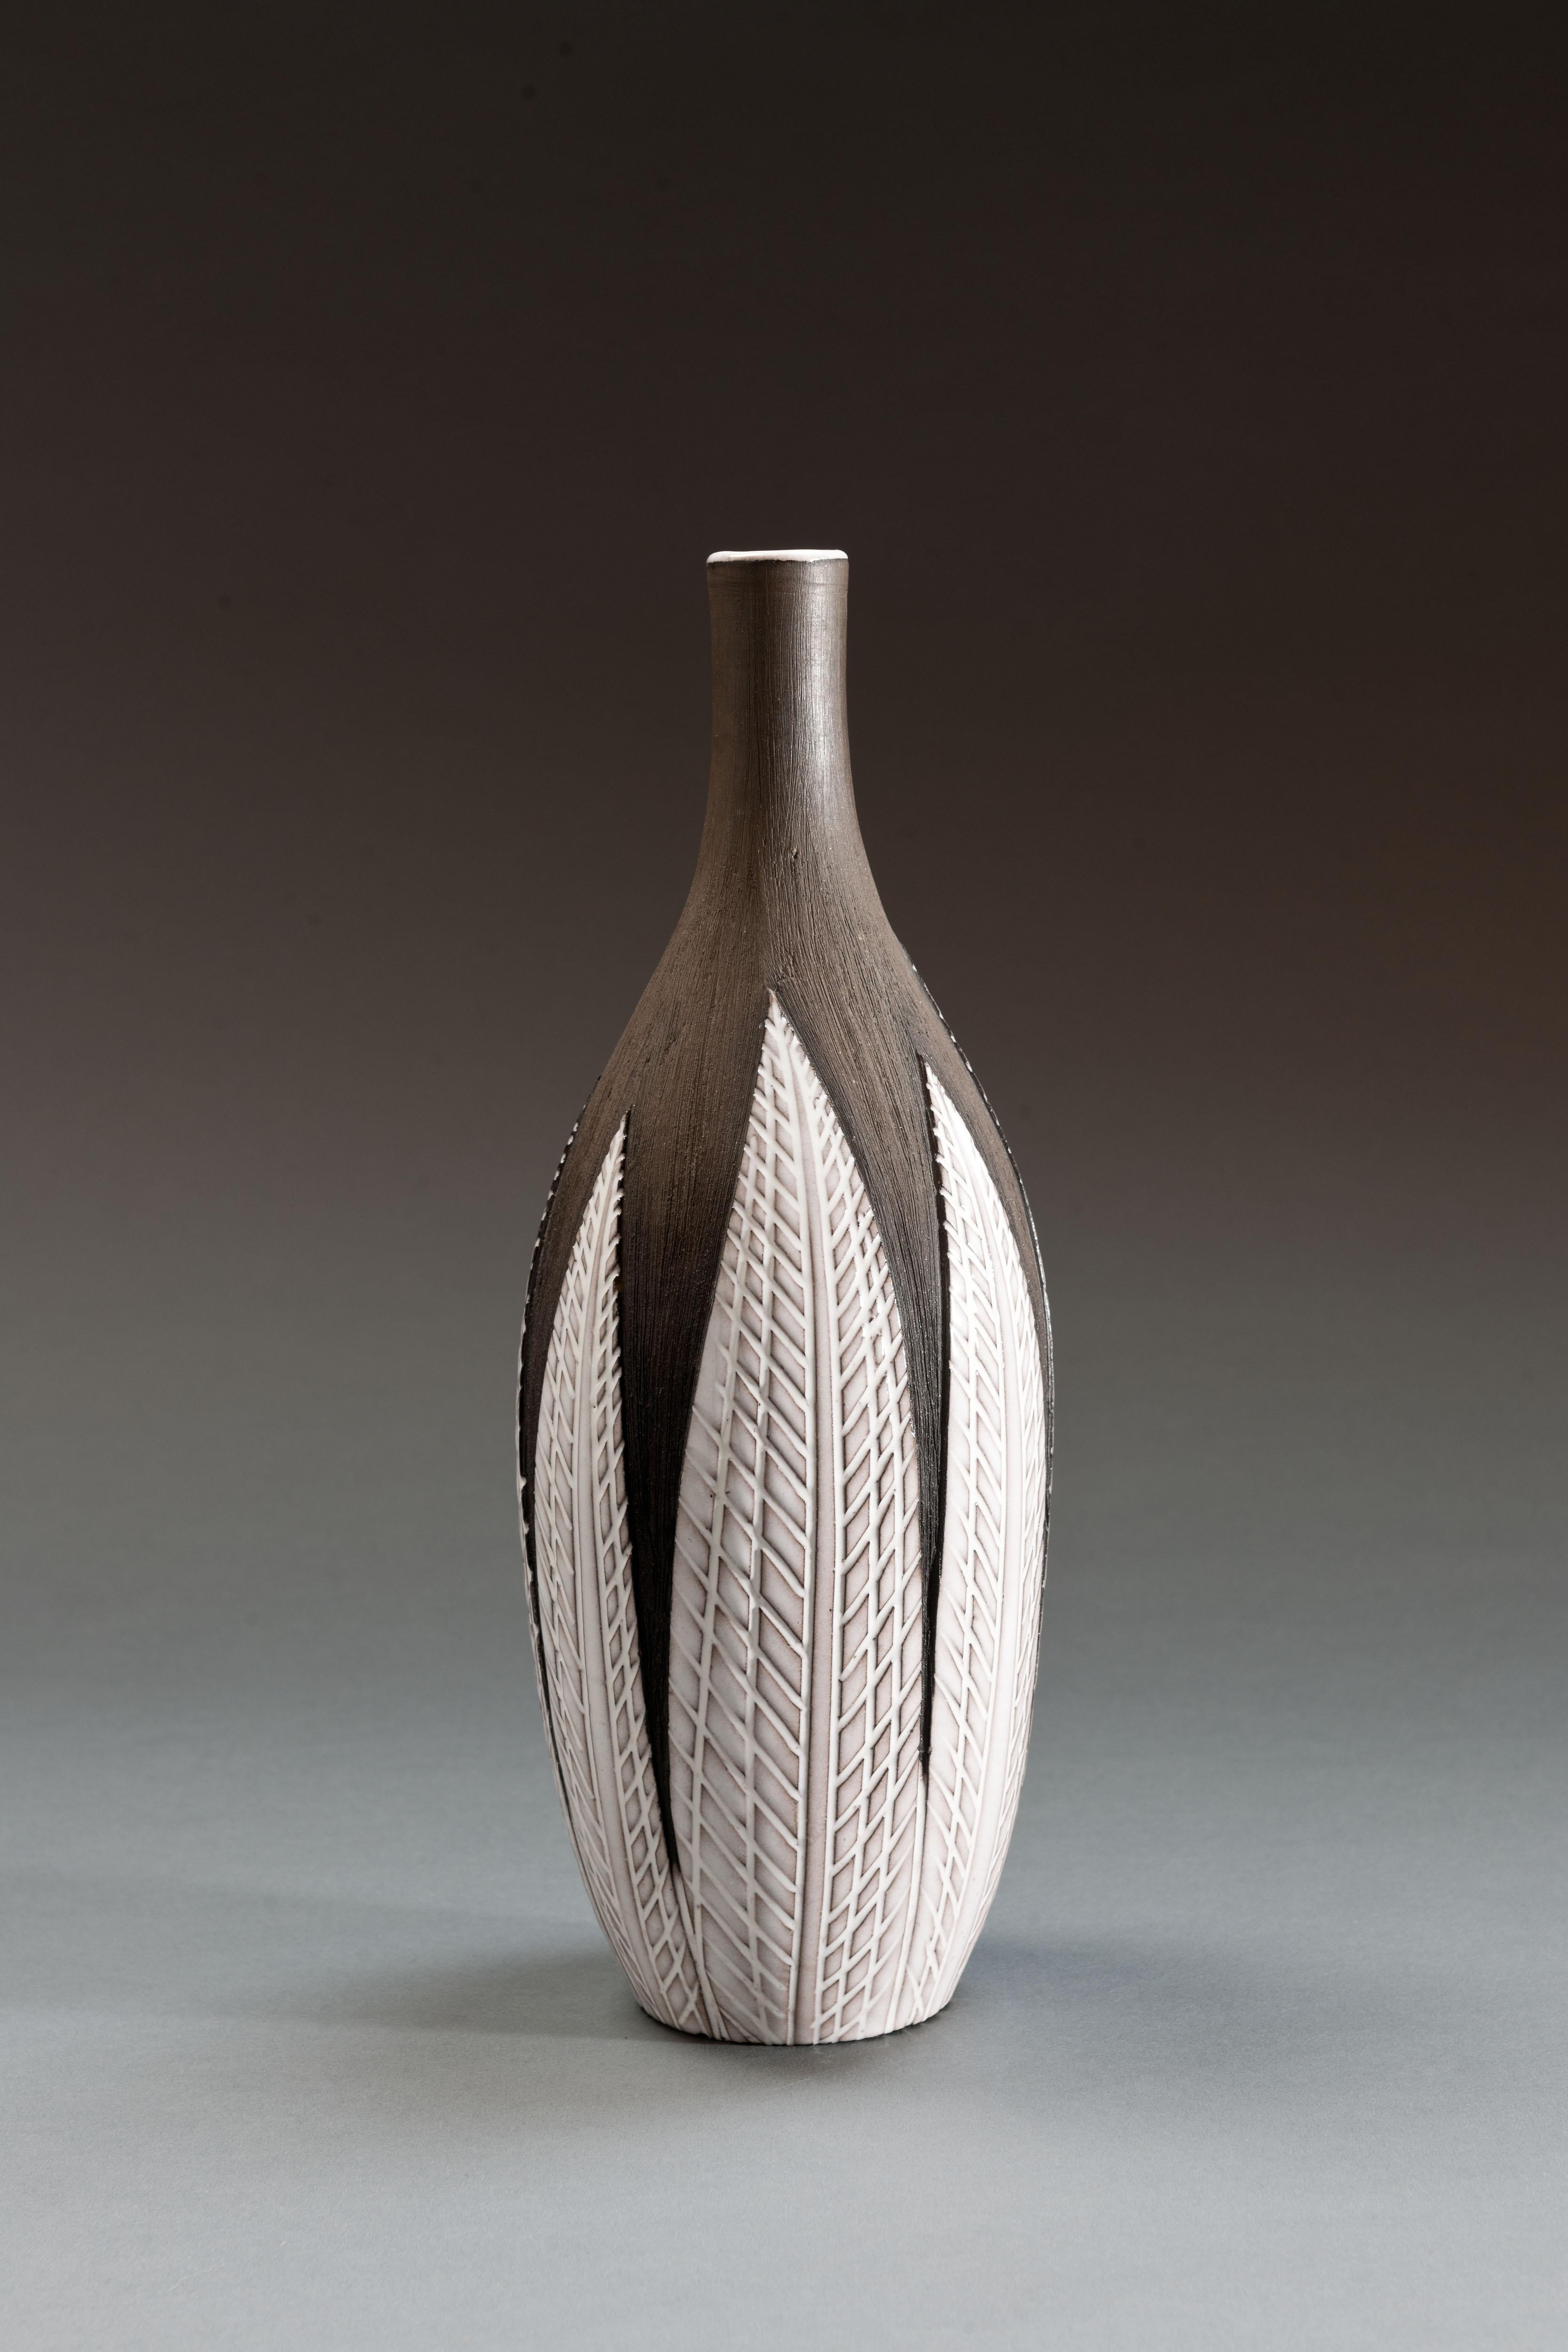 Anna-Lisa Thomson Ceramic 'Paprika' Vases (3) by Upsala Ekeby For Sale 4